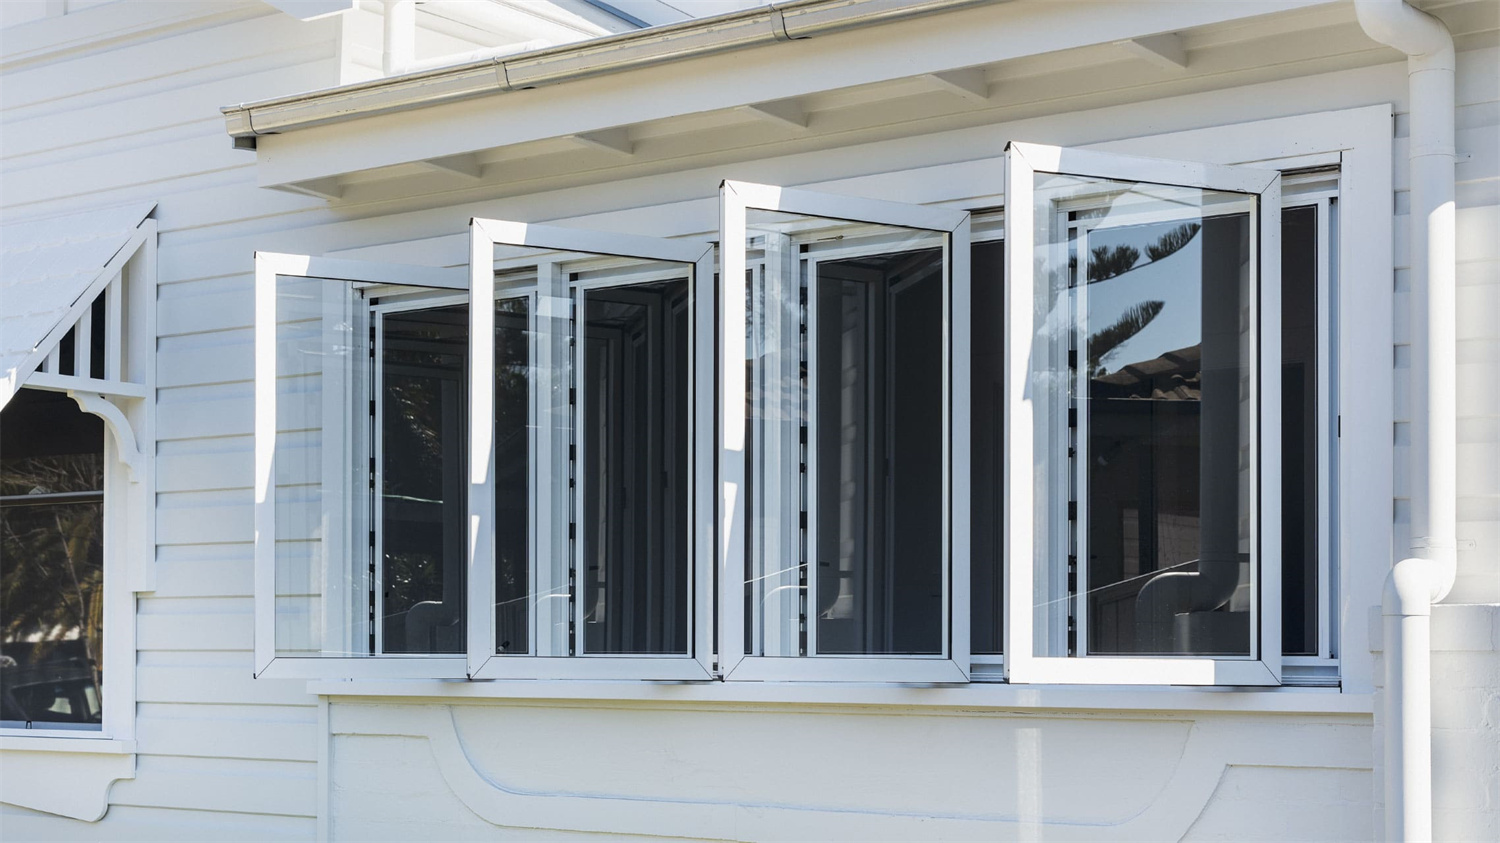 New design minimalism style thermal break aluminum profile framed casement windows